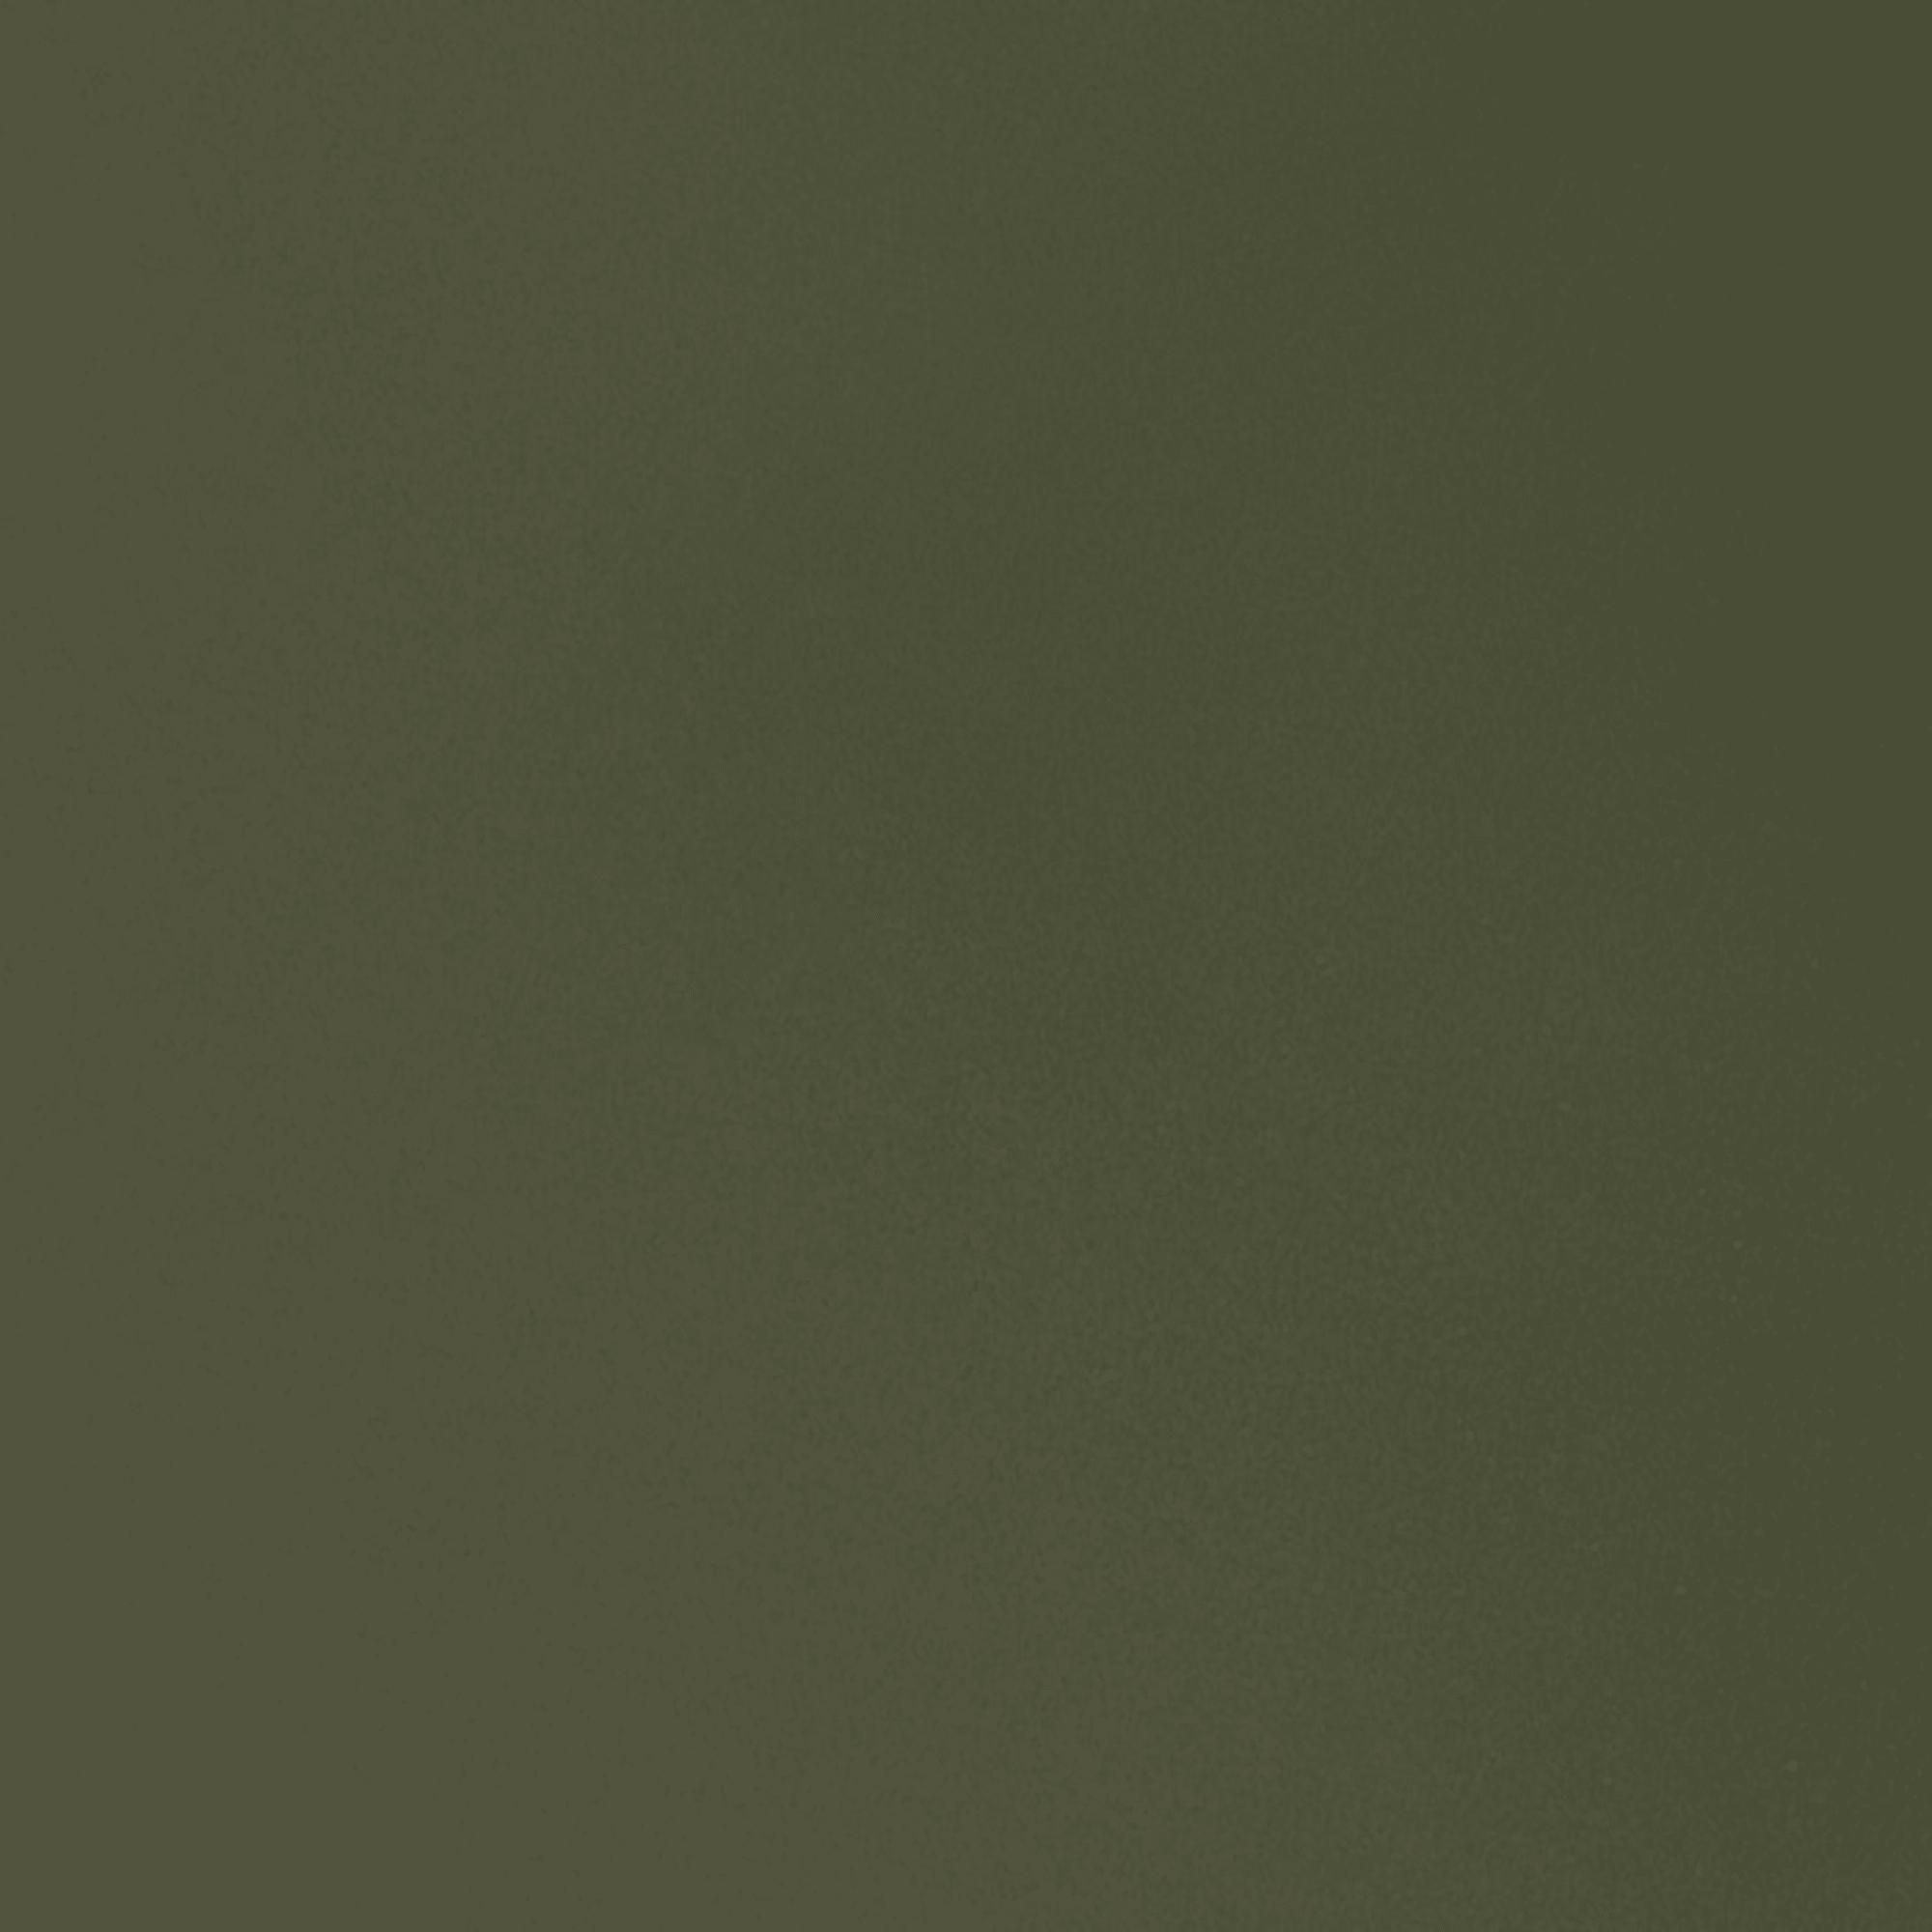 Fdb Møbler C35 B matbord ek, oliv linoleum, 95x220 cm